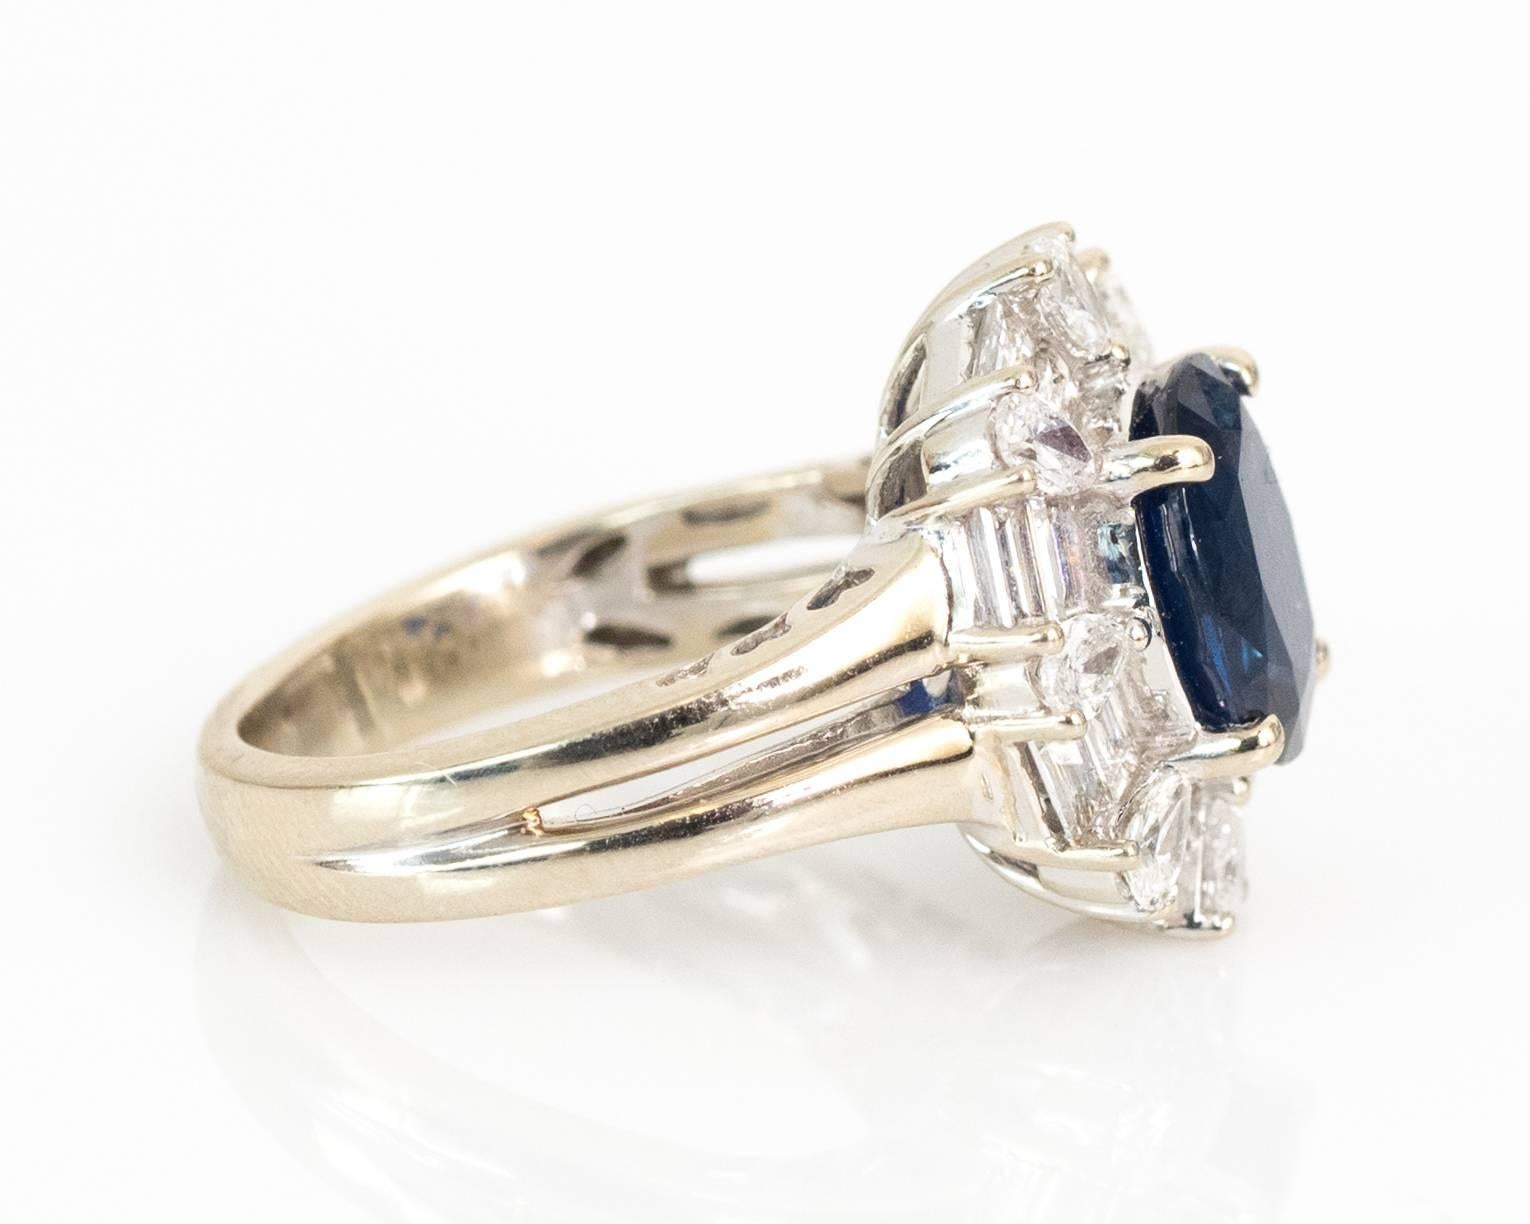 Retro 1970s GIA Certified 2.0 carat Sapphire, Diamond and 14k White Gold Ring